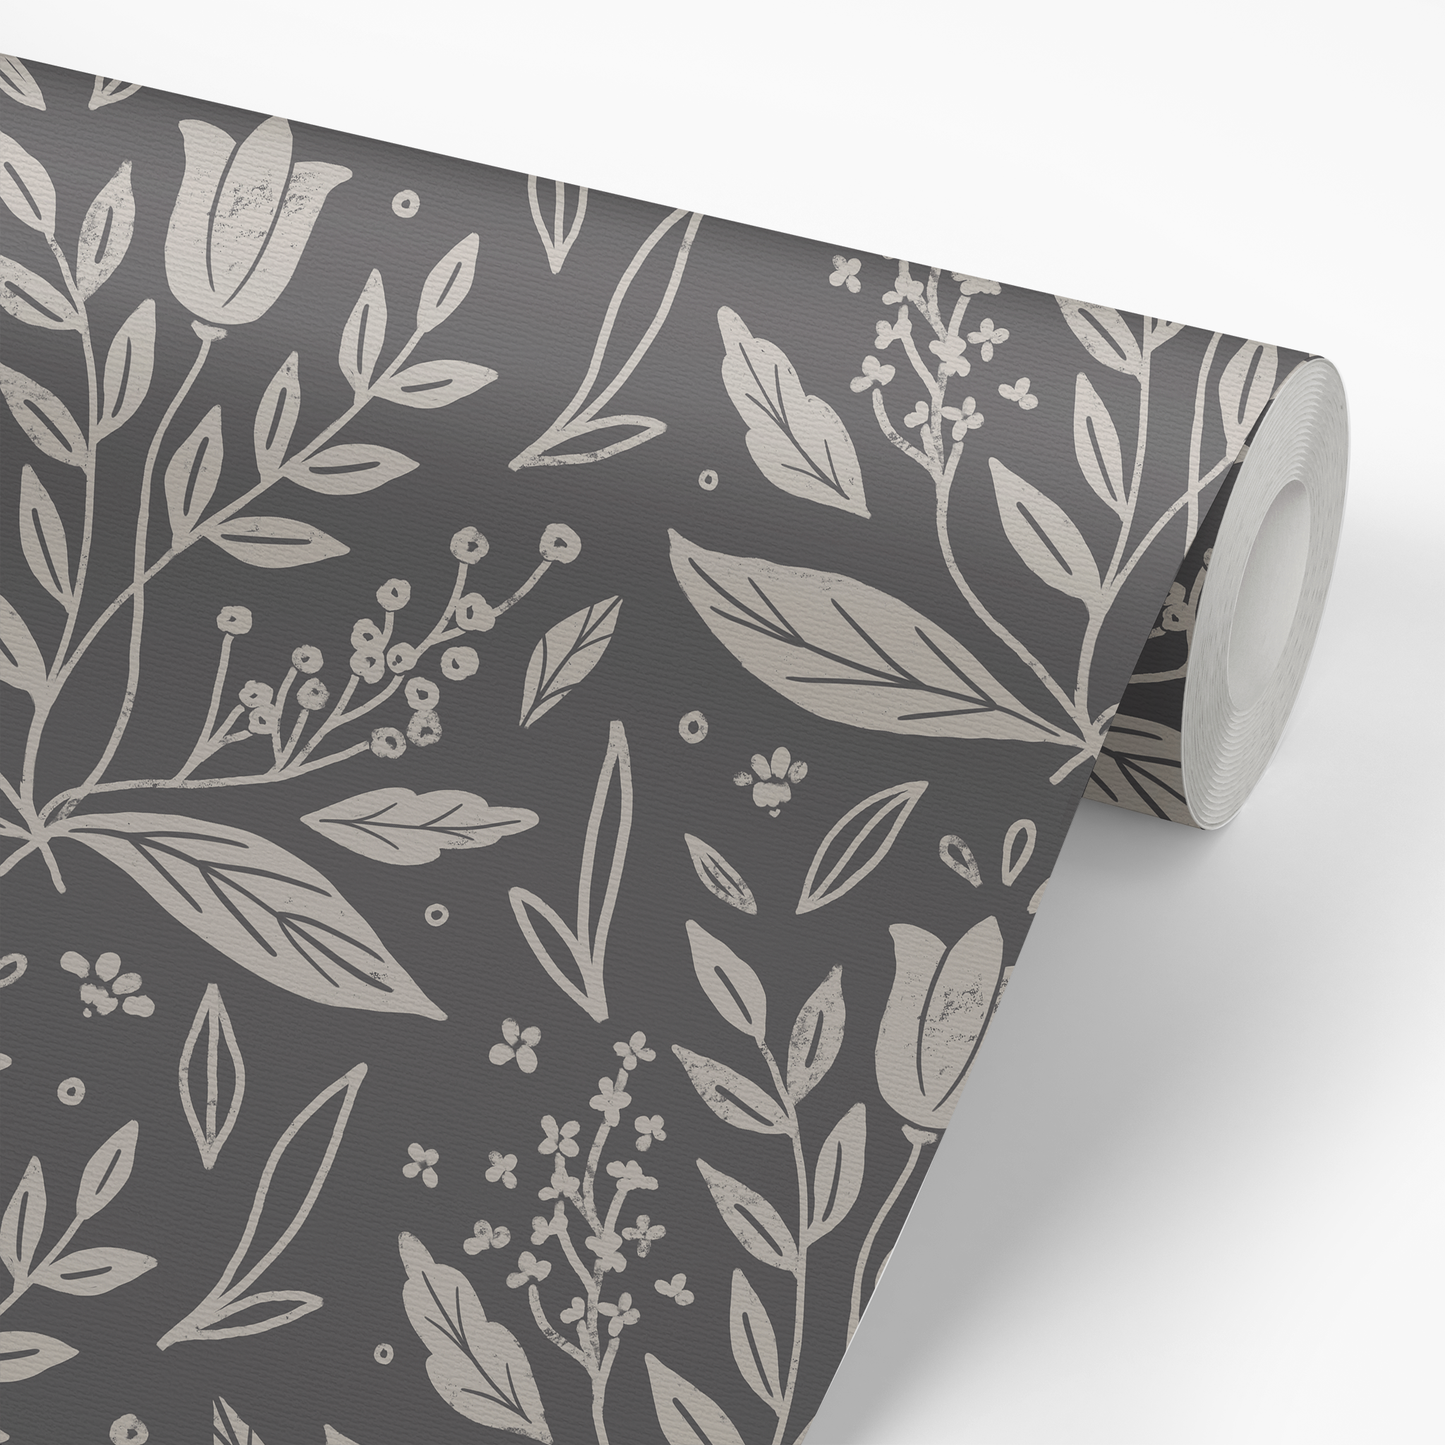 Folk Blooms Wallpaper - Gray